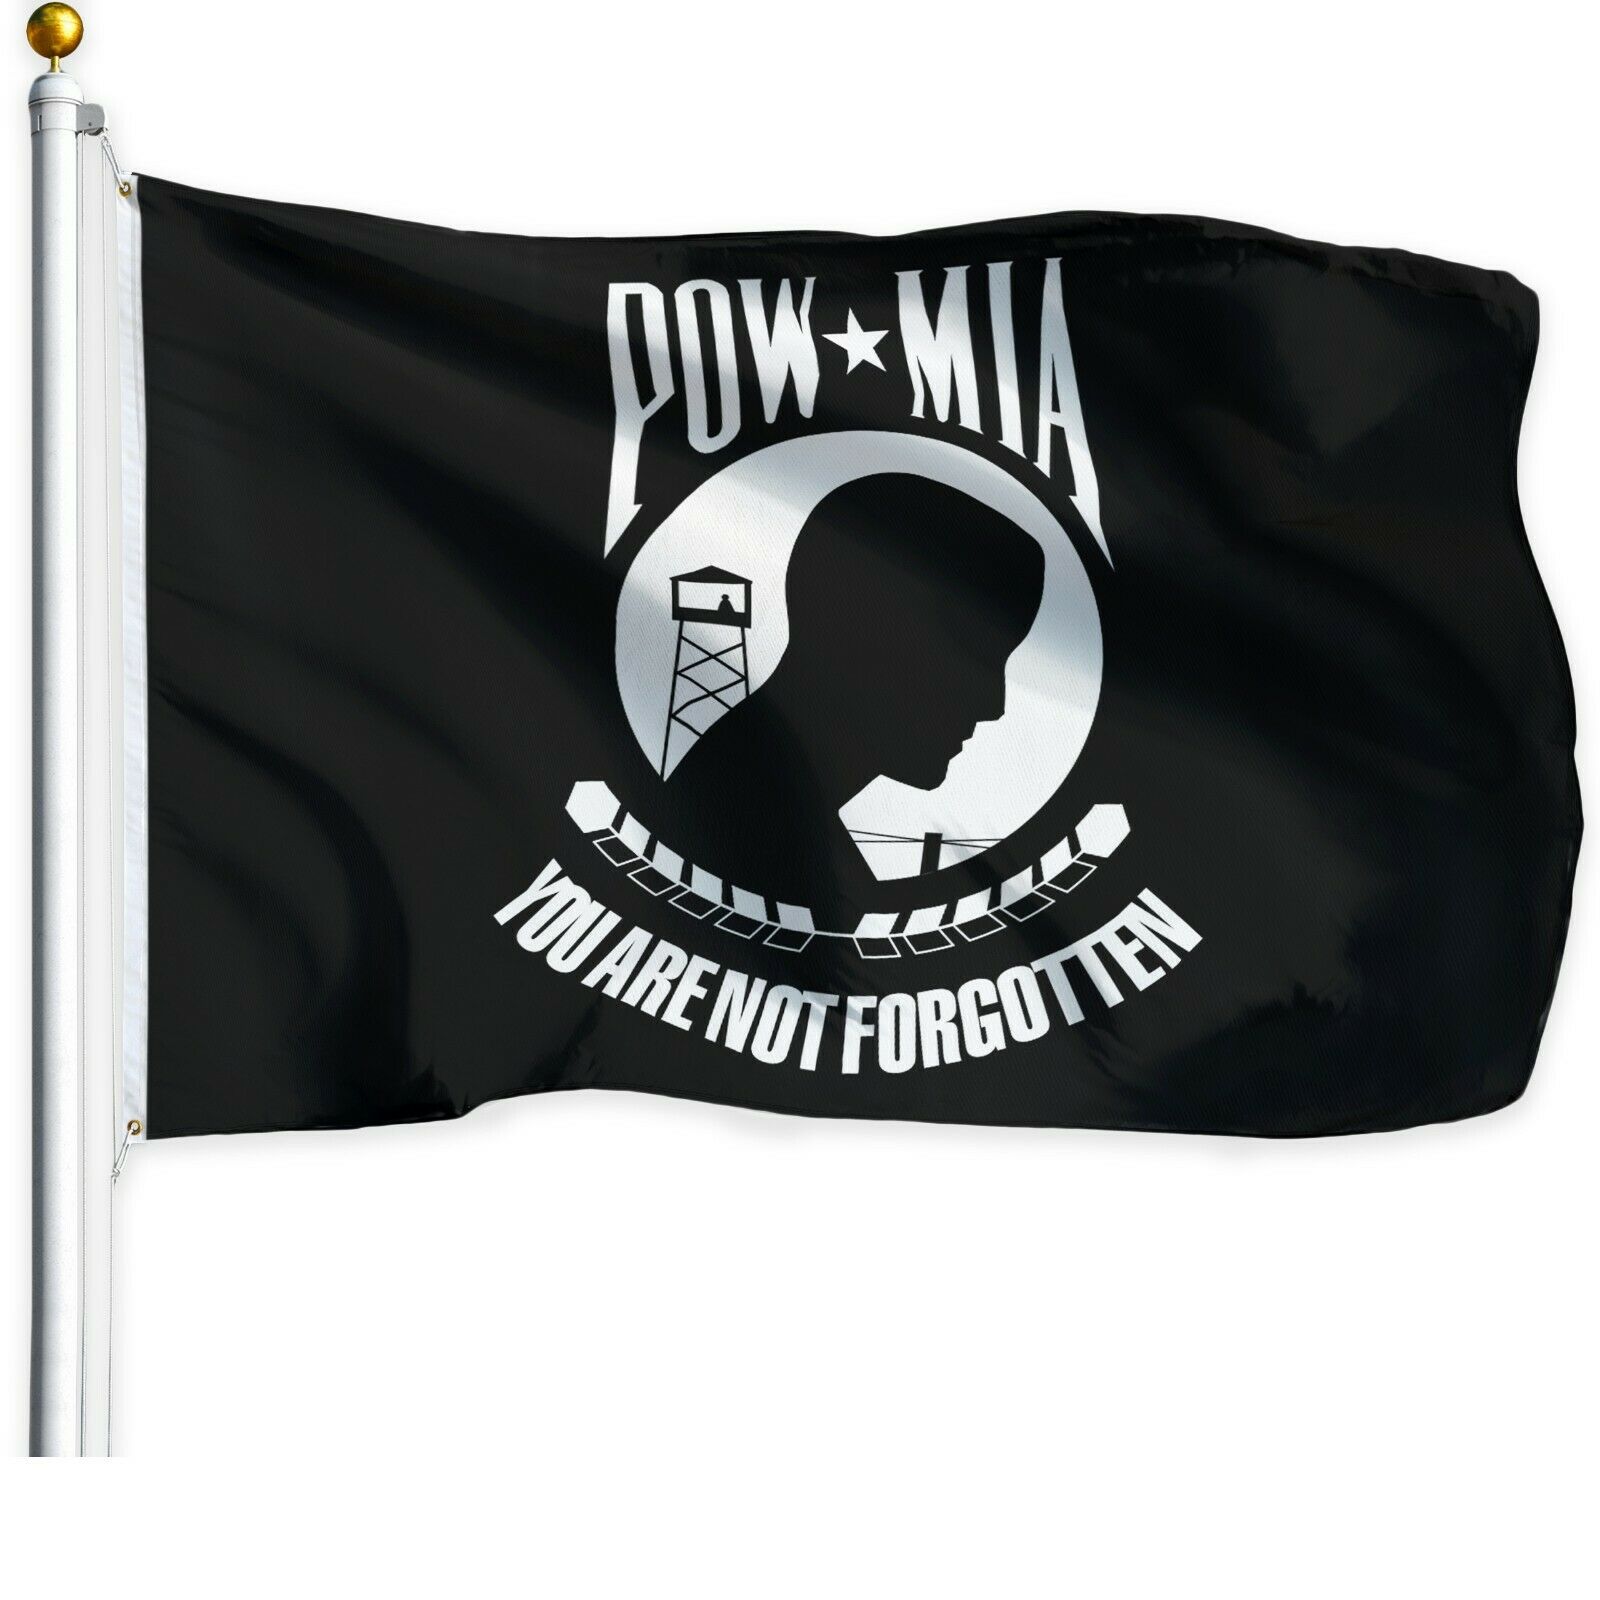 Pow-mia Black Flag You Are Not Forgotten Prisoner Of War 3x5ft